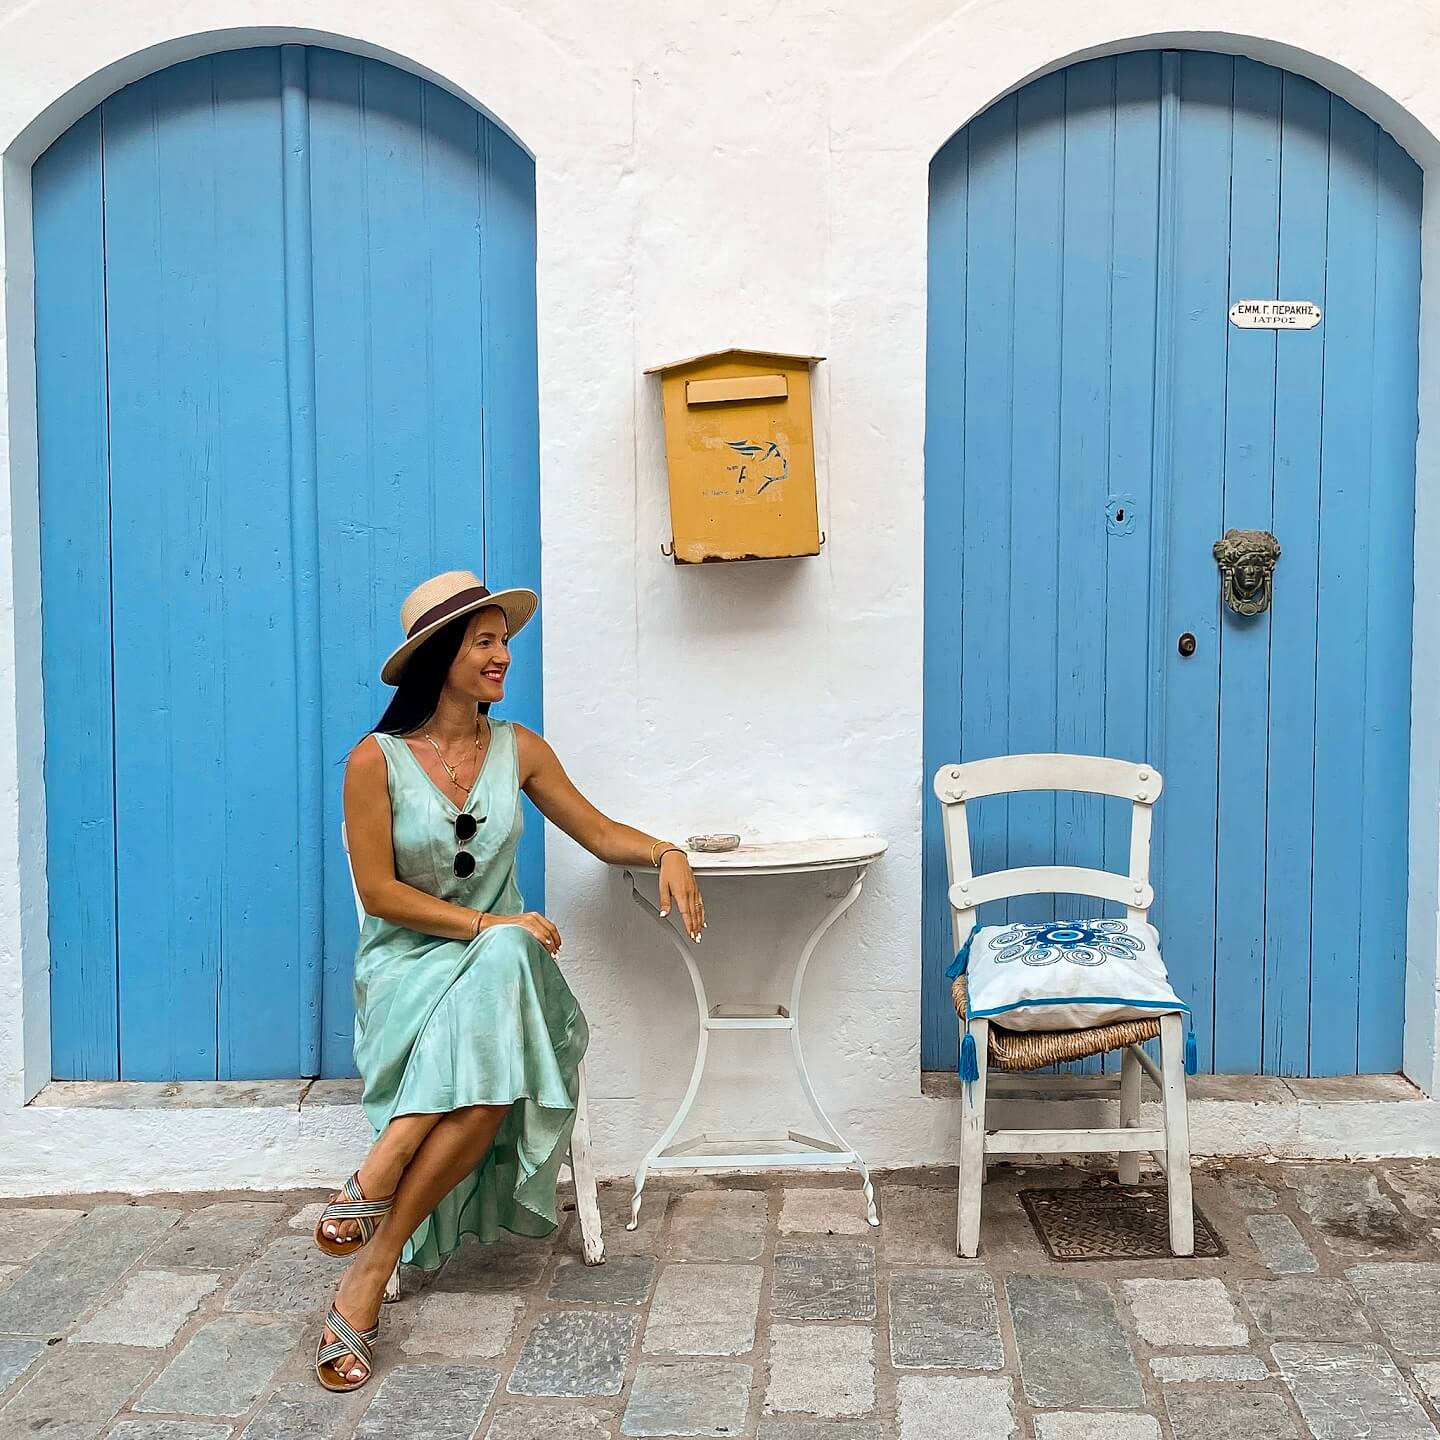 Stella sitting in front of the blue doors in Kritsa, Crete